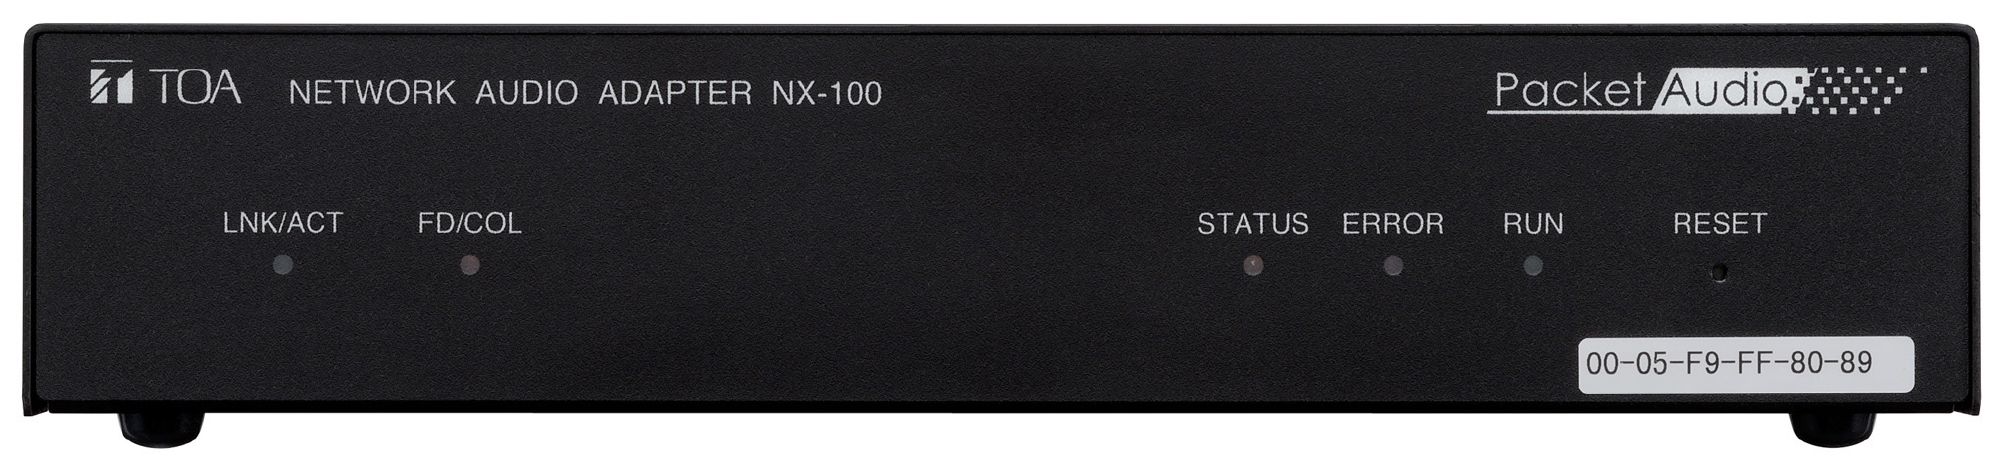 NX-100 Netwerk Audio Adapter